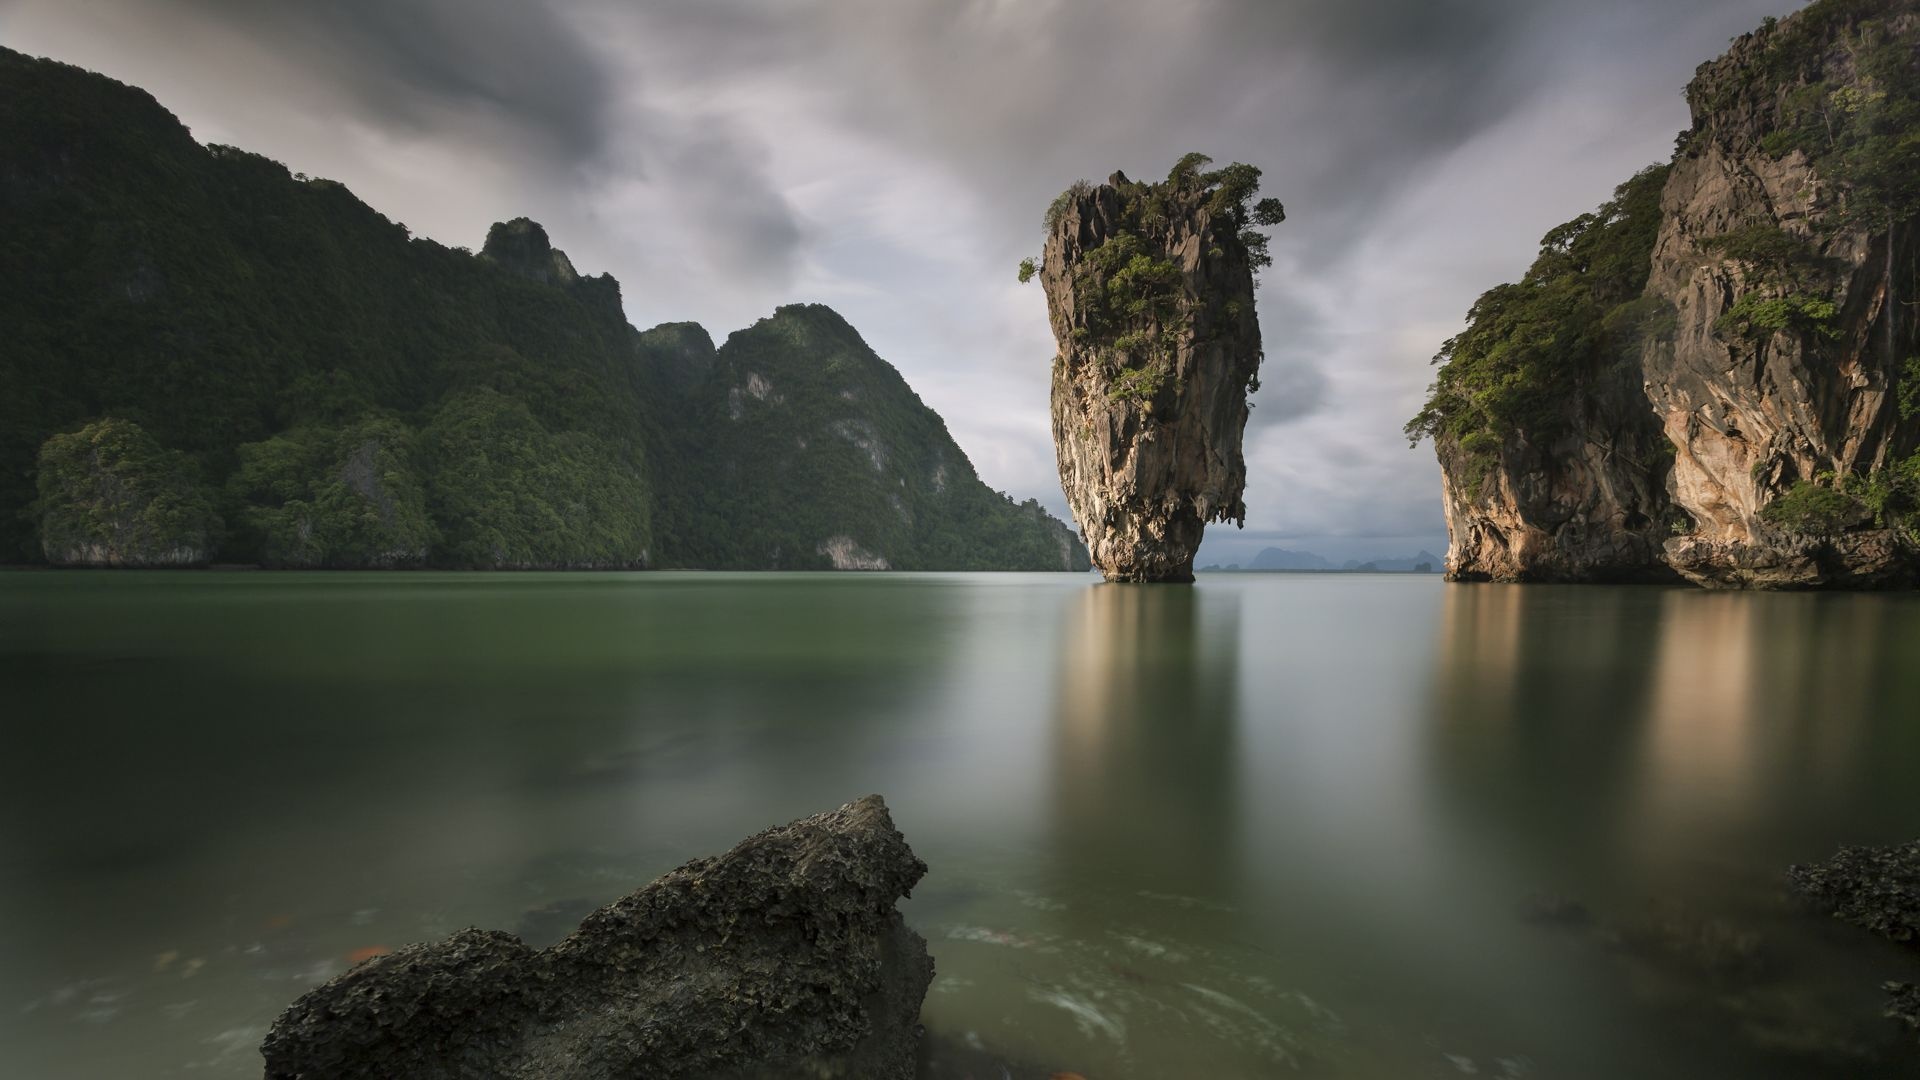 Khao Phing Kan, James Bond Island, Thai landscape, Picture-perfect scenery, 1920x1080 Full HD Desktop